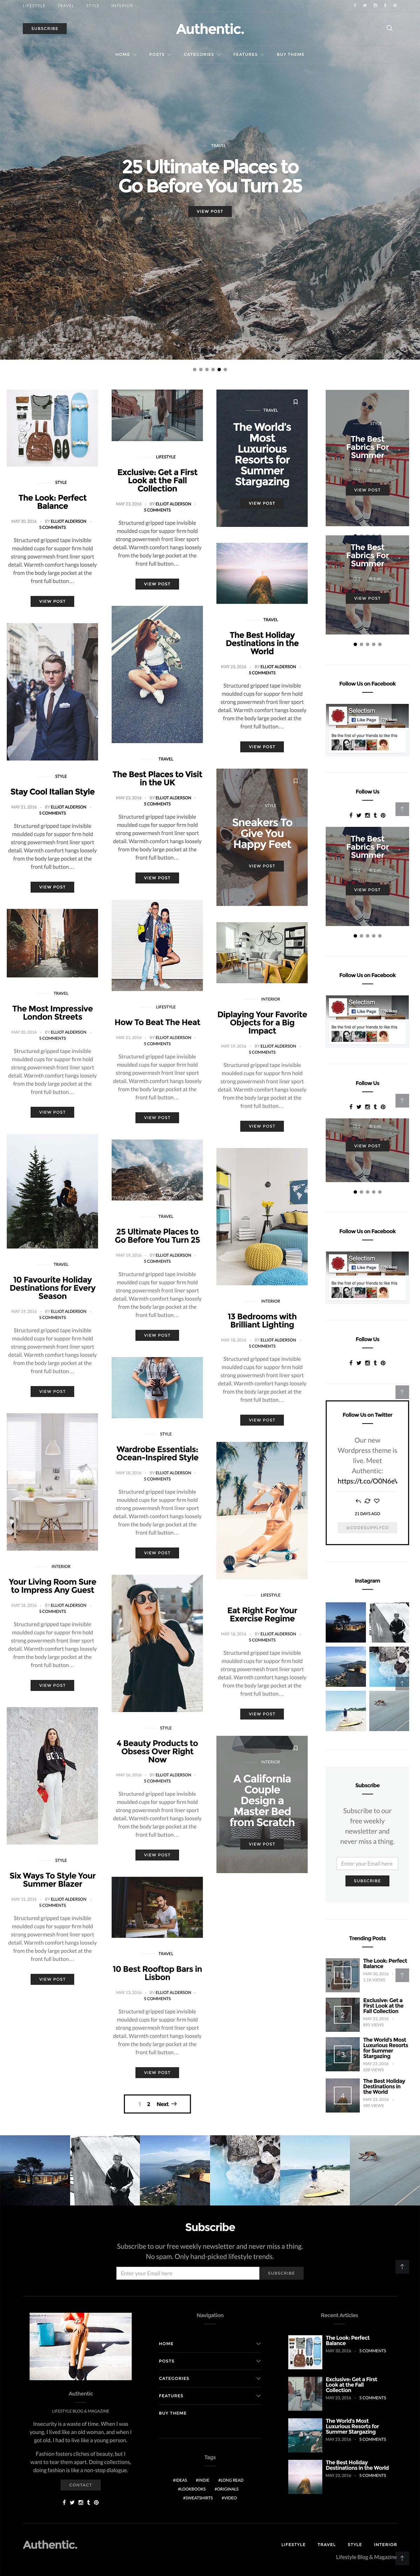 Authentic - Lifestyle Blog & Magazine WordPress Theme